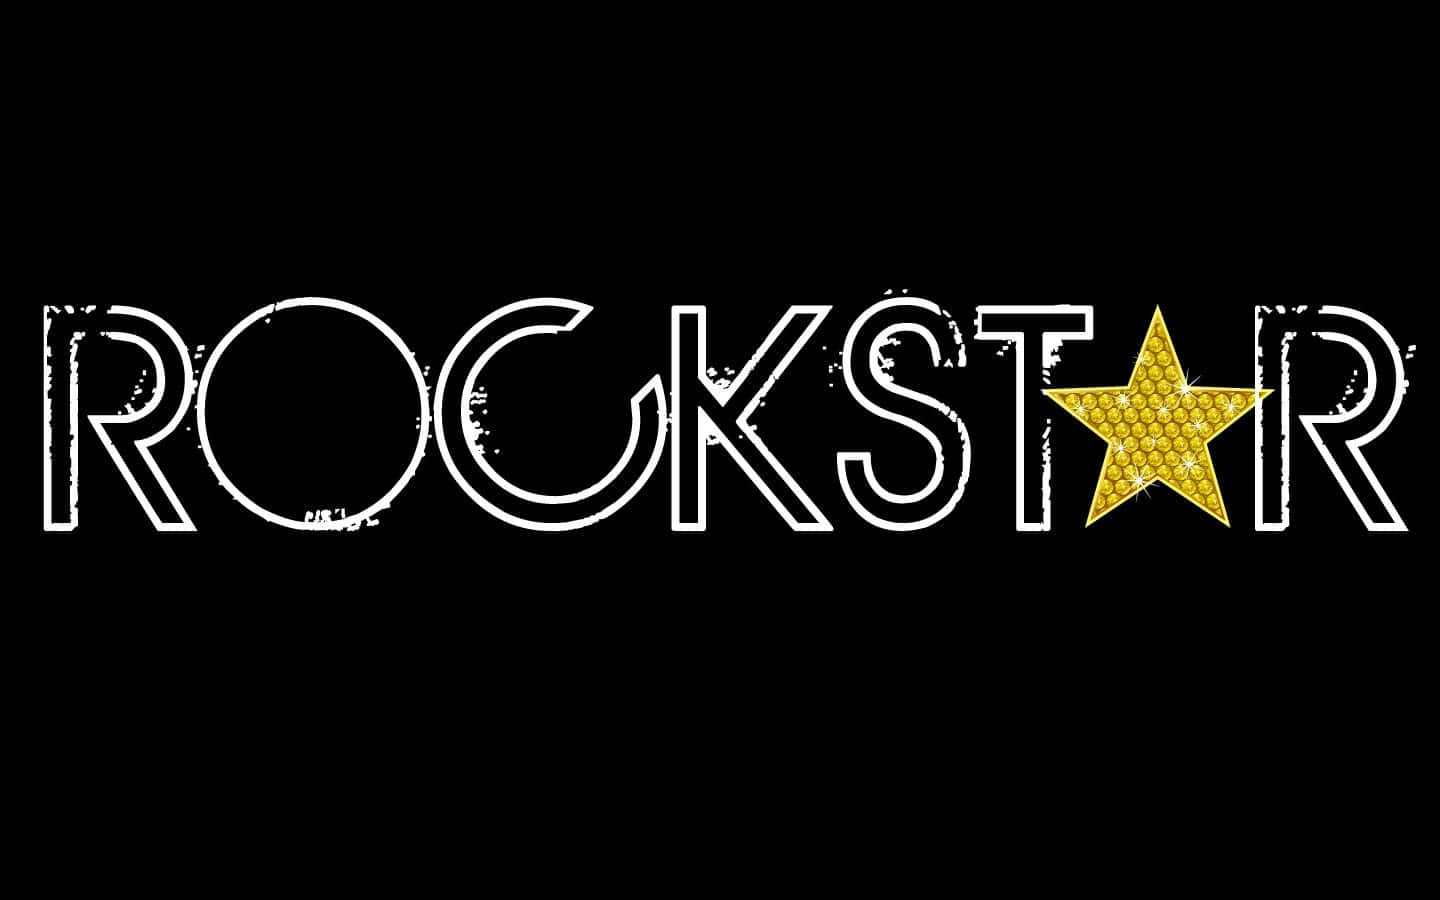 Rockstar Logo On A Black Background Wallpaper